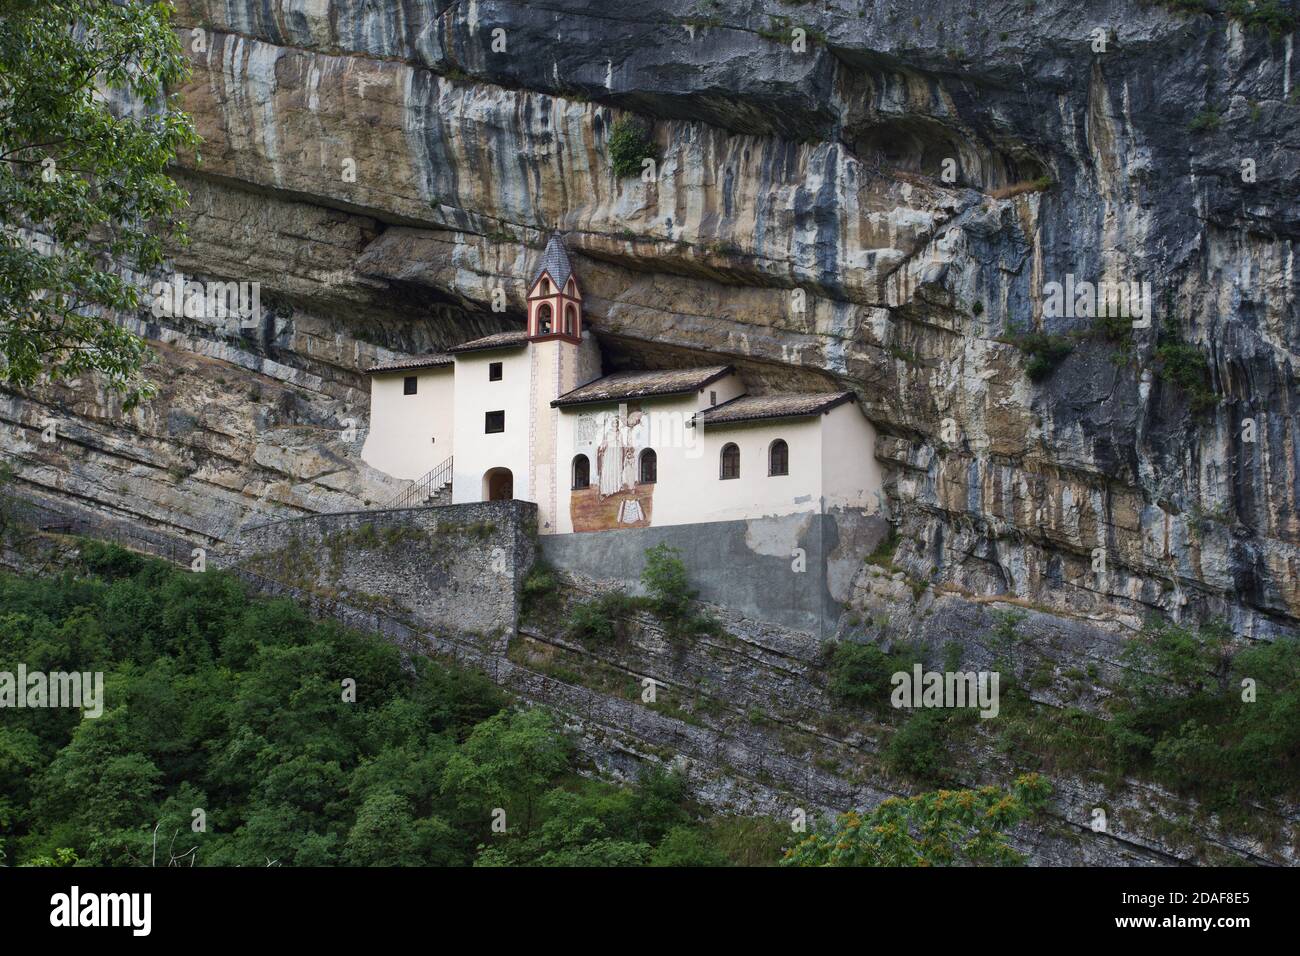 La Ermita de San Columbano habitada por ermitaños desde el año 753 d.C. - Trambileno, cerca de Rovereto, Trentino, Italia - Patrimonio espiritual irlandés en Italia Foto de stock